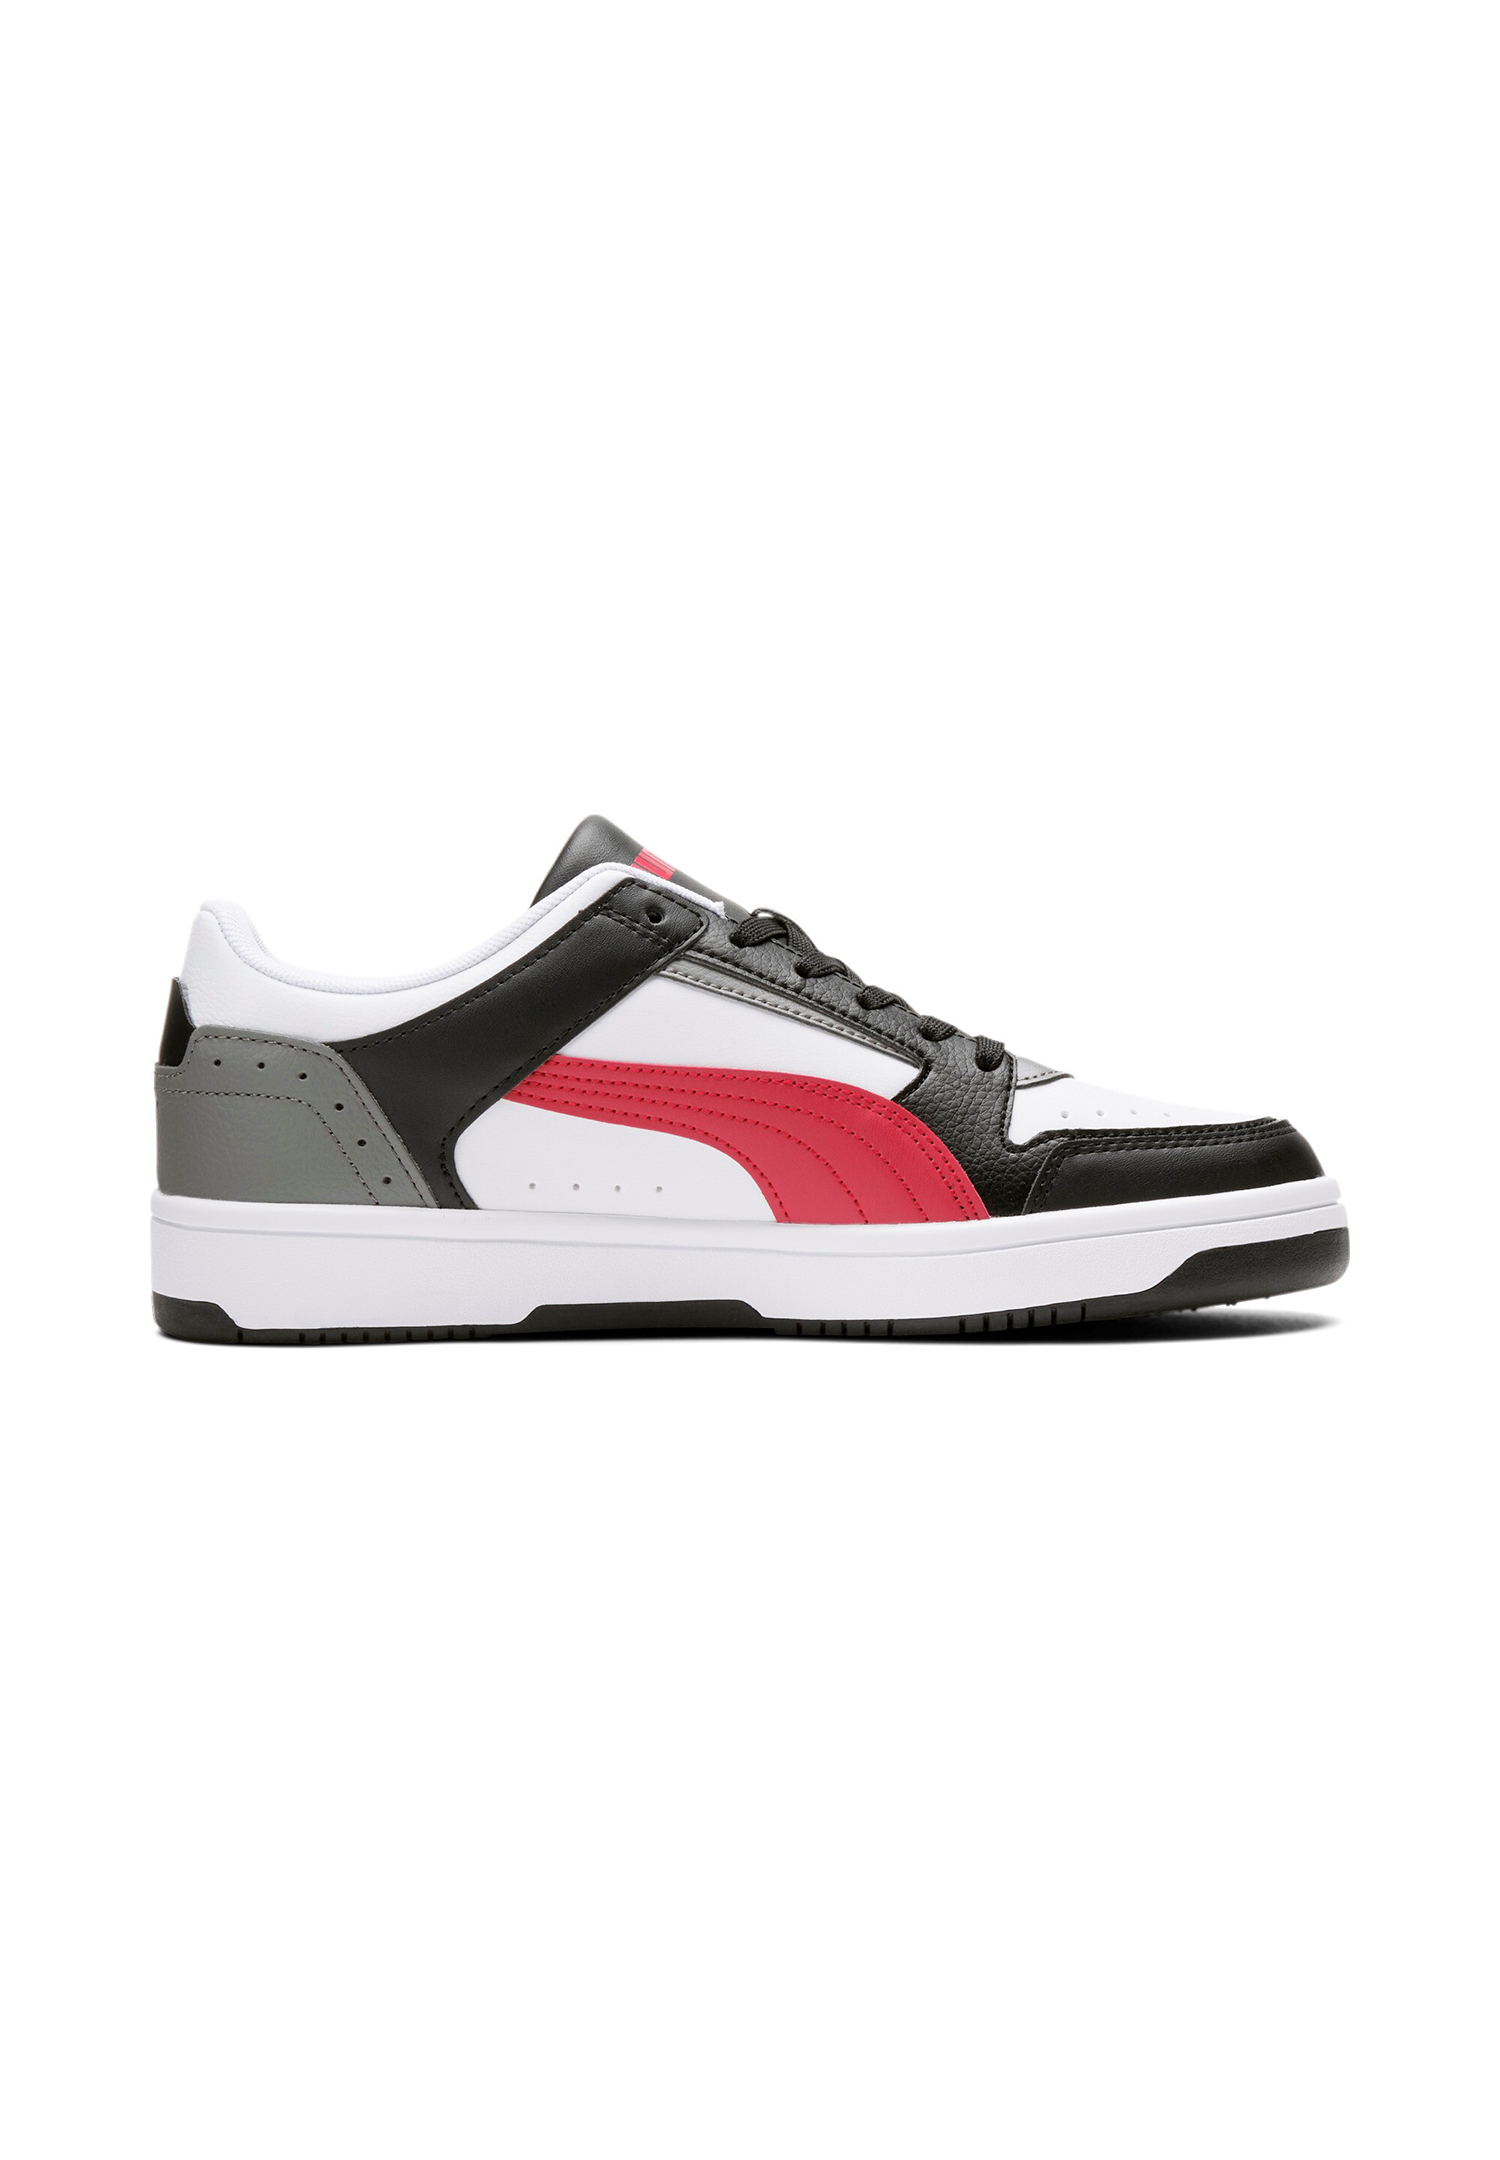 Puma Rebound JOY Low Top Herren Sneaker Sportschuh 380747 weiss rot